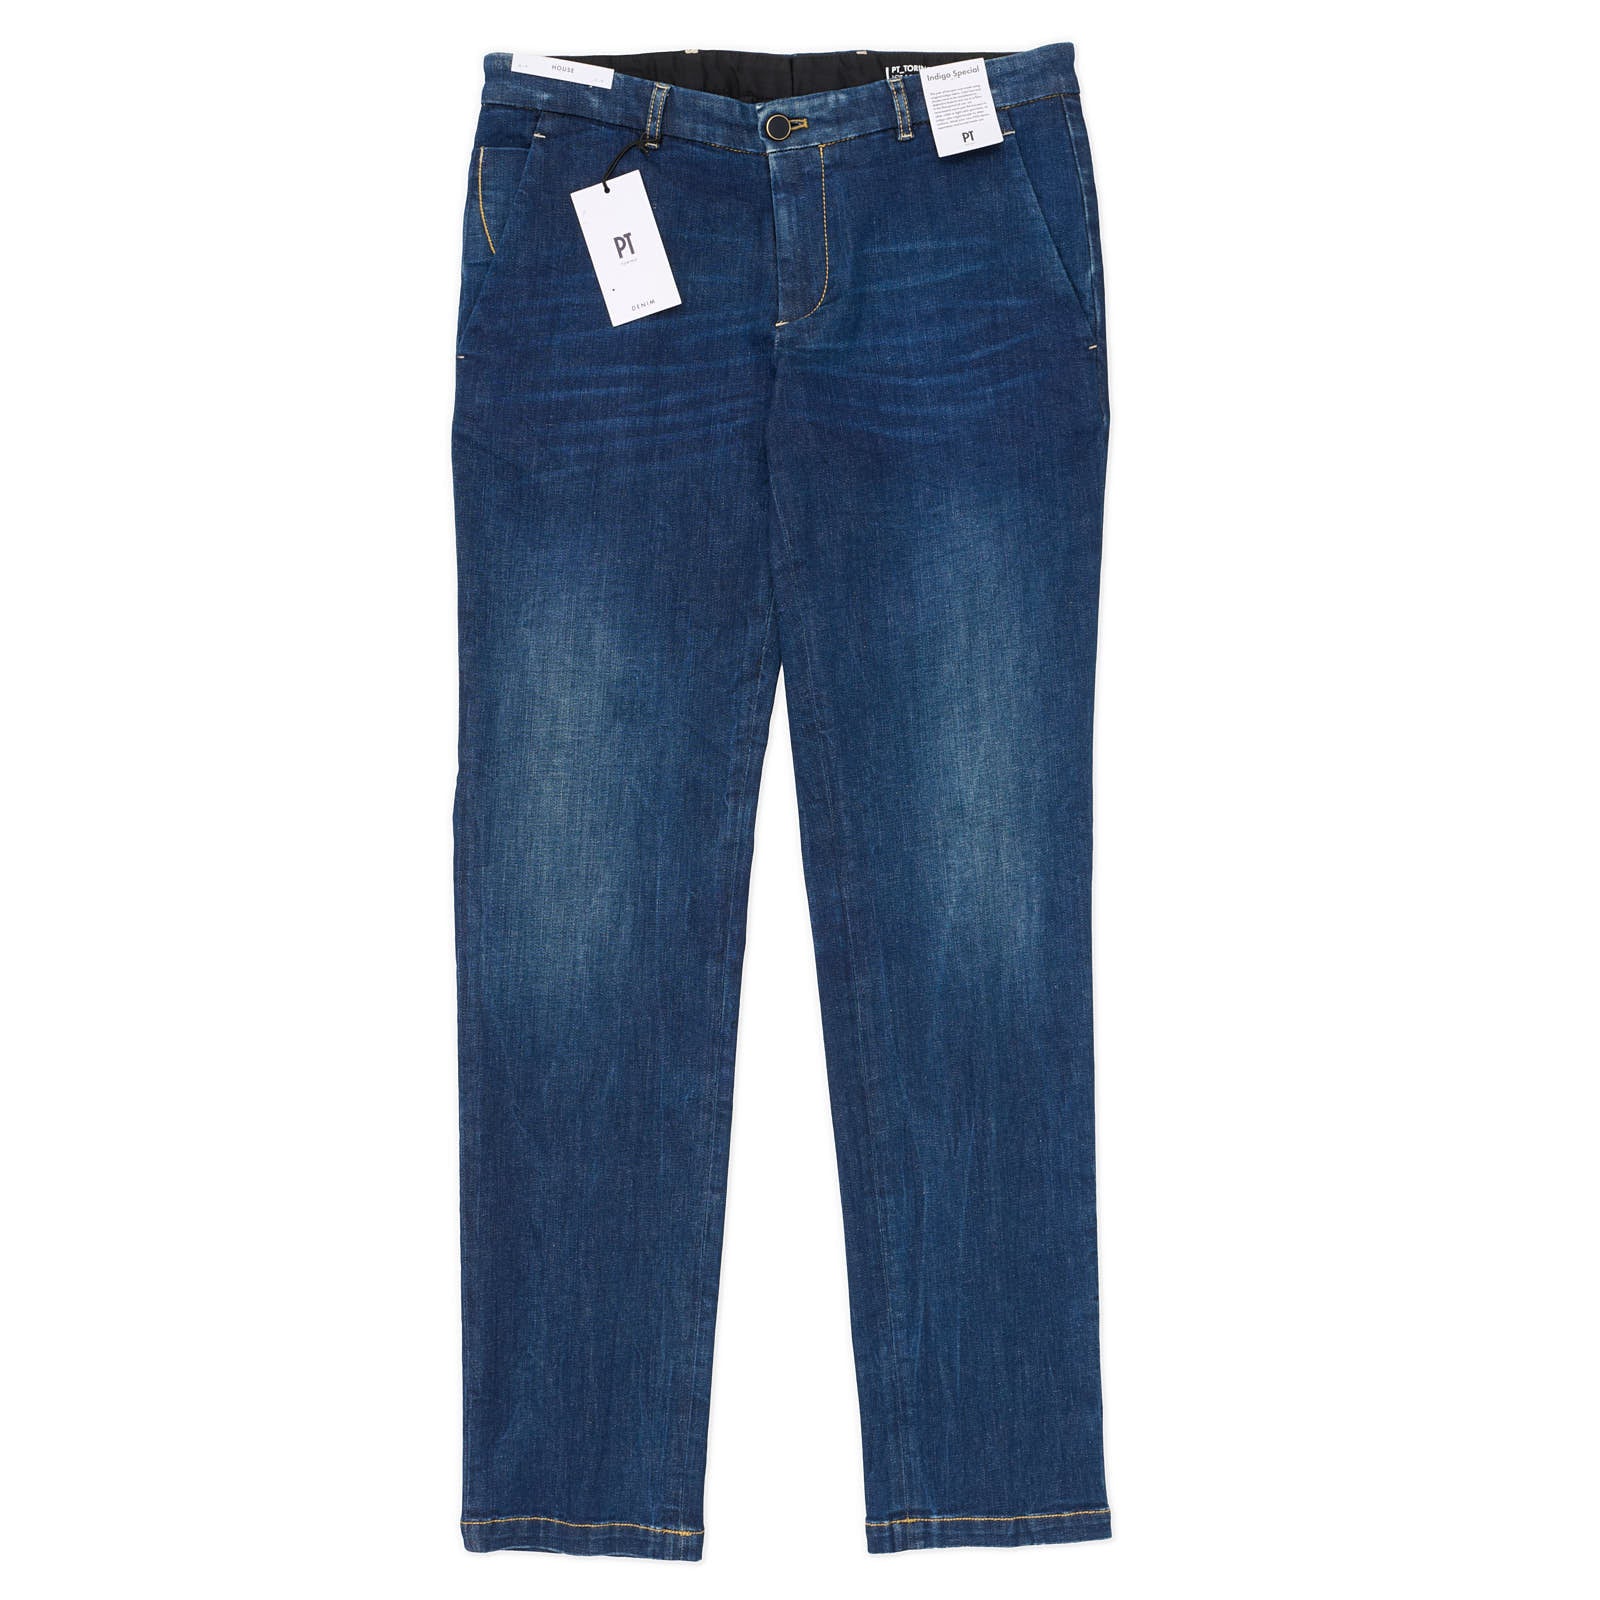 PT05 "House" Indigo Blue Cotton Stretch Slim Fit Denim Jeans NEW US 30